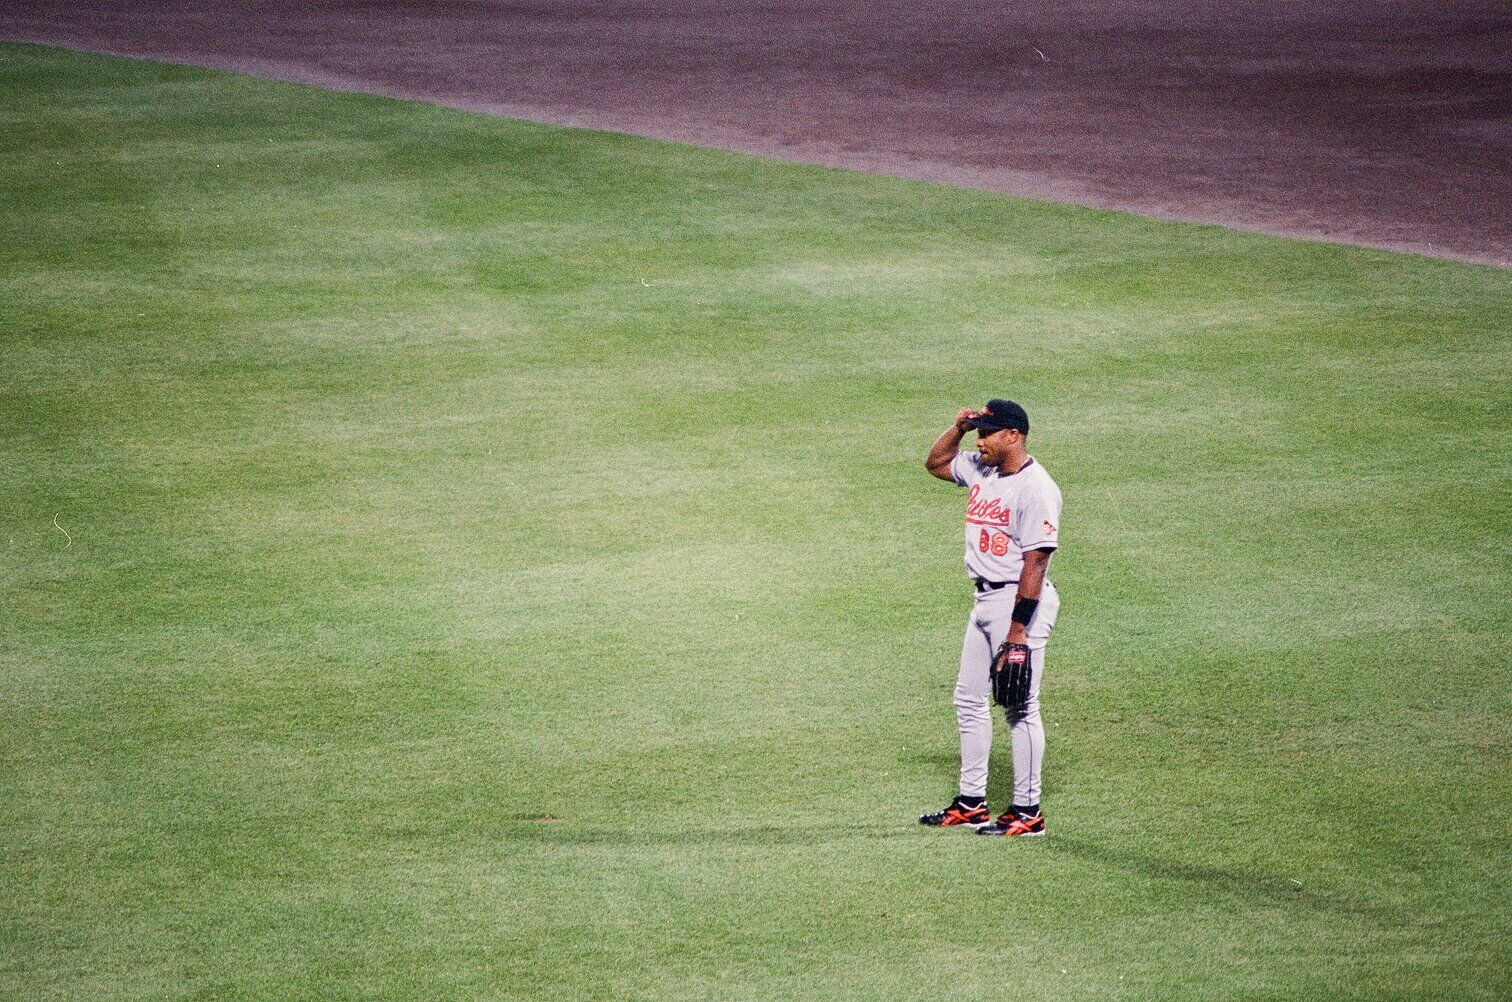 JT27-9 1999 Baseball Boston Red Sox Baltimore Orioles (22pc) ORIG 35mm Negatives Без бренда - фотография #6